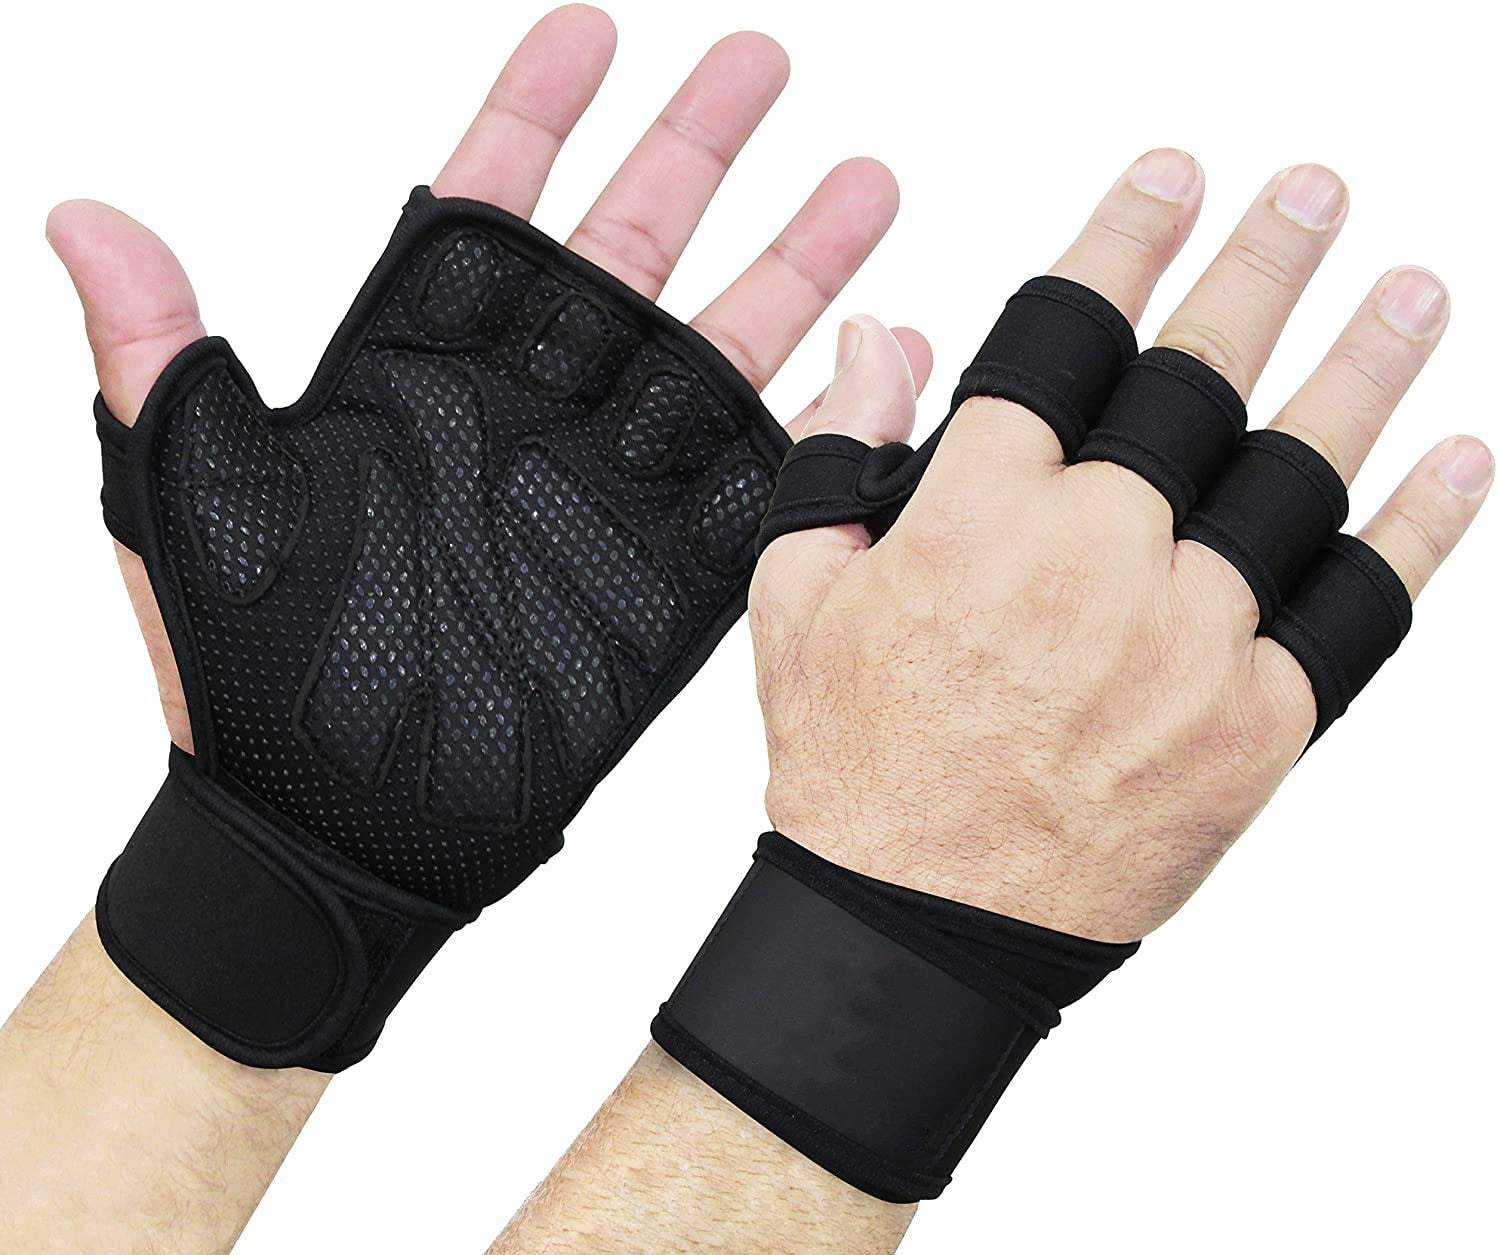 Sports Cross Training Gloves Wrist Support